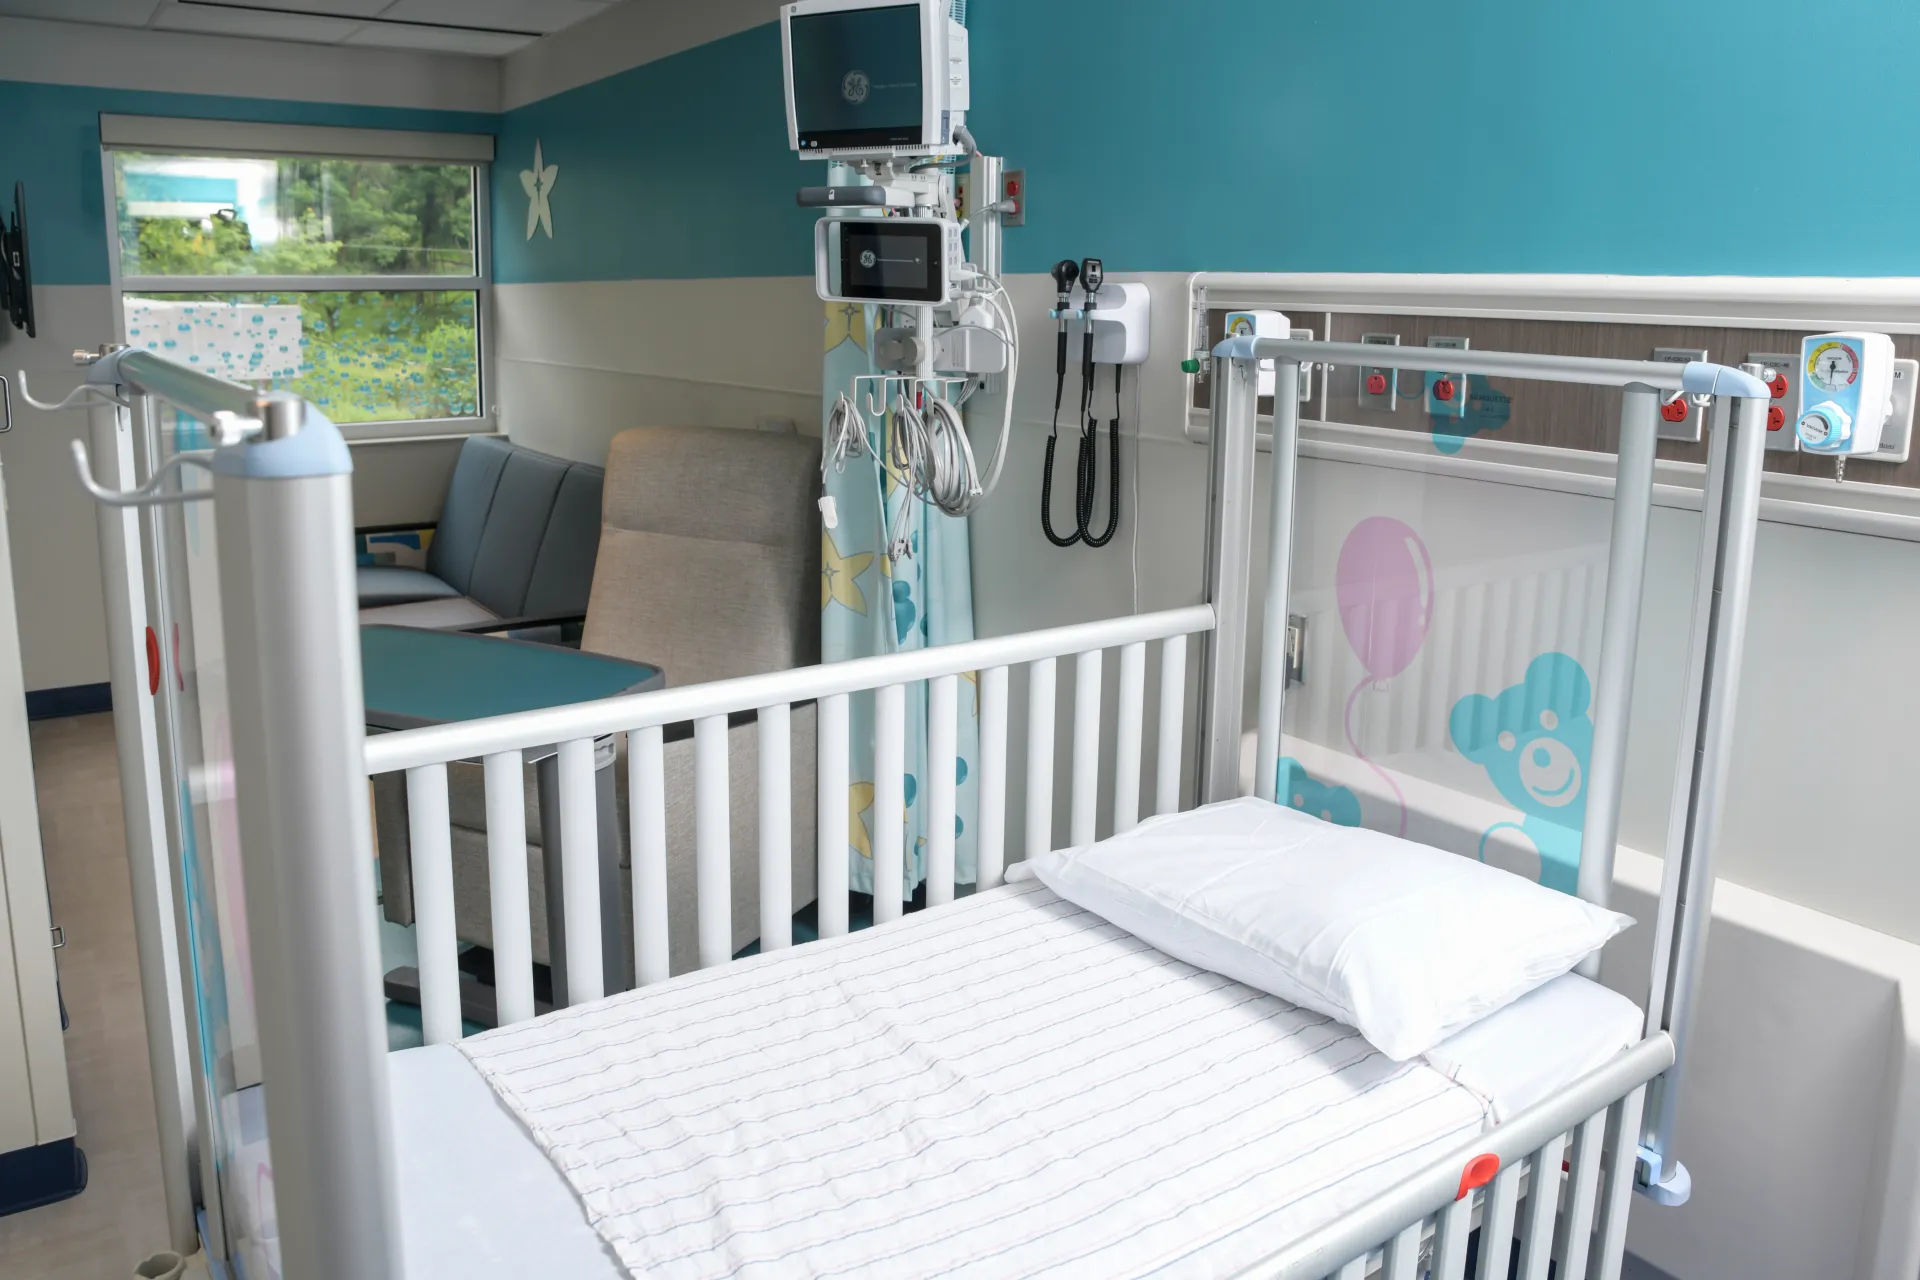 Hospital room with a medical crib 